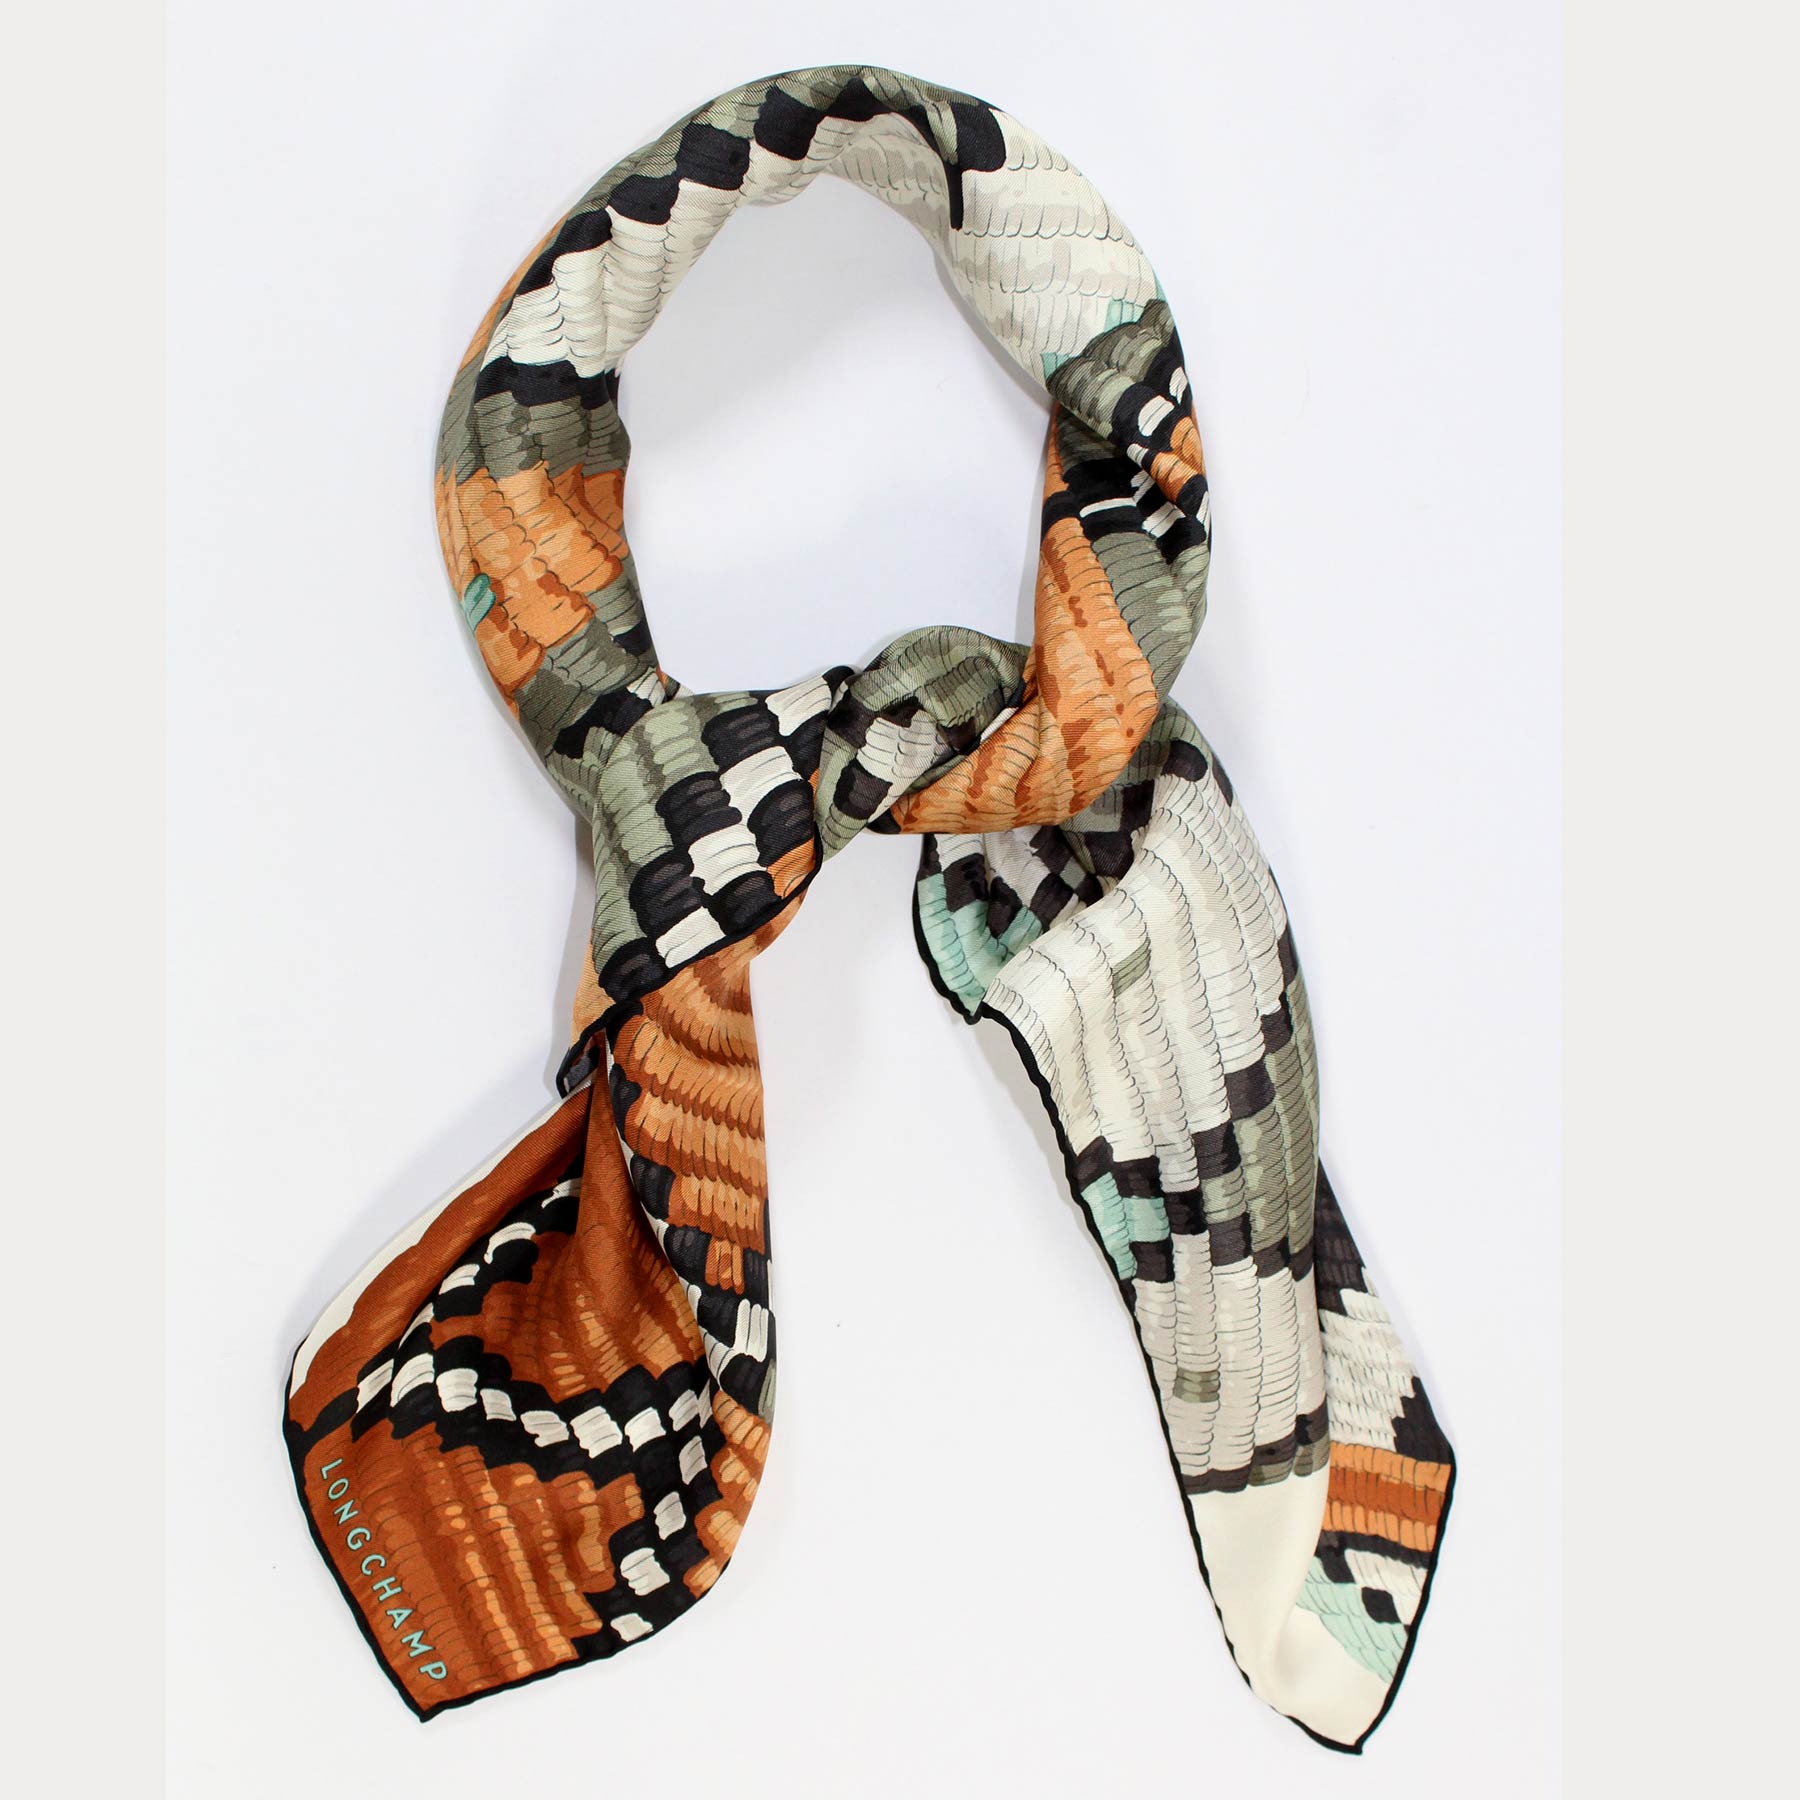 longchamp scarf sale